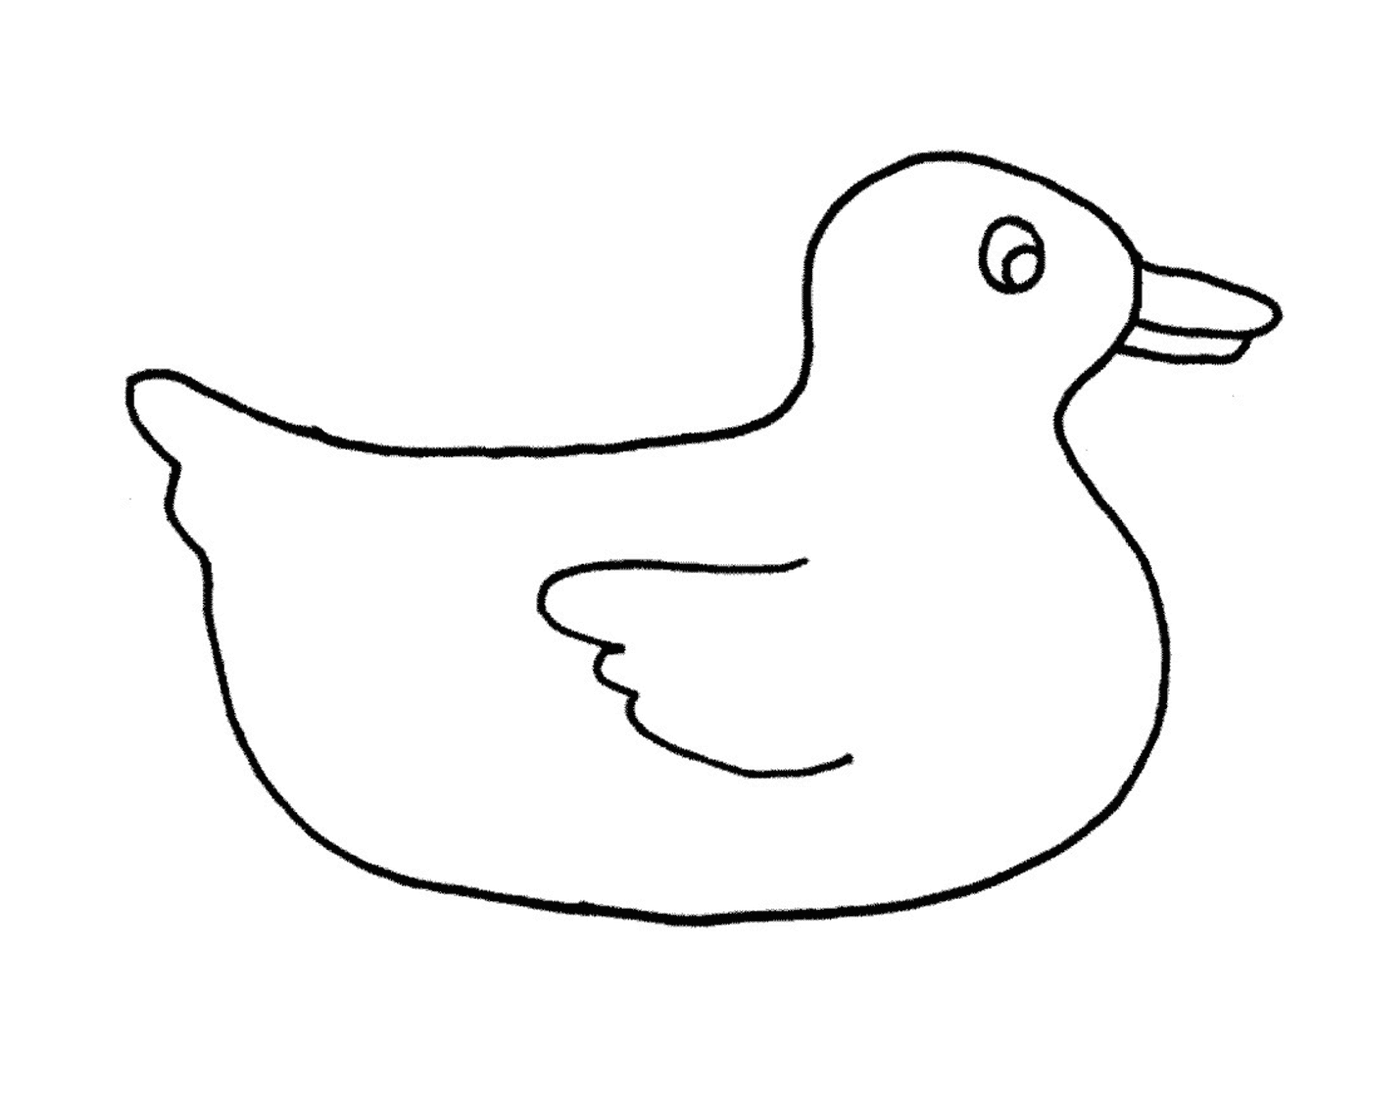 coloriage dessin animaux canard